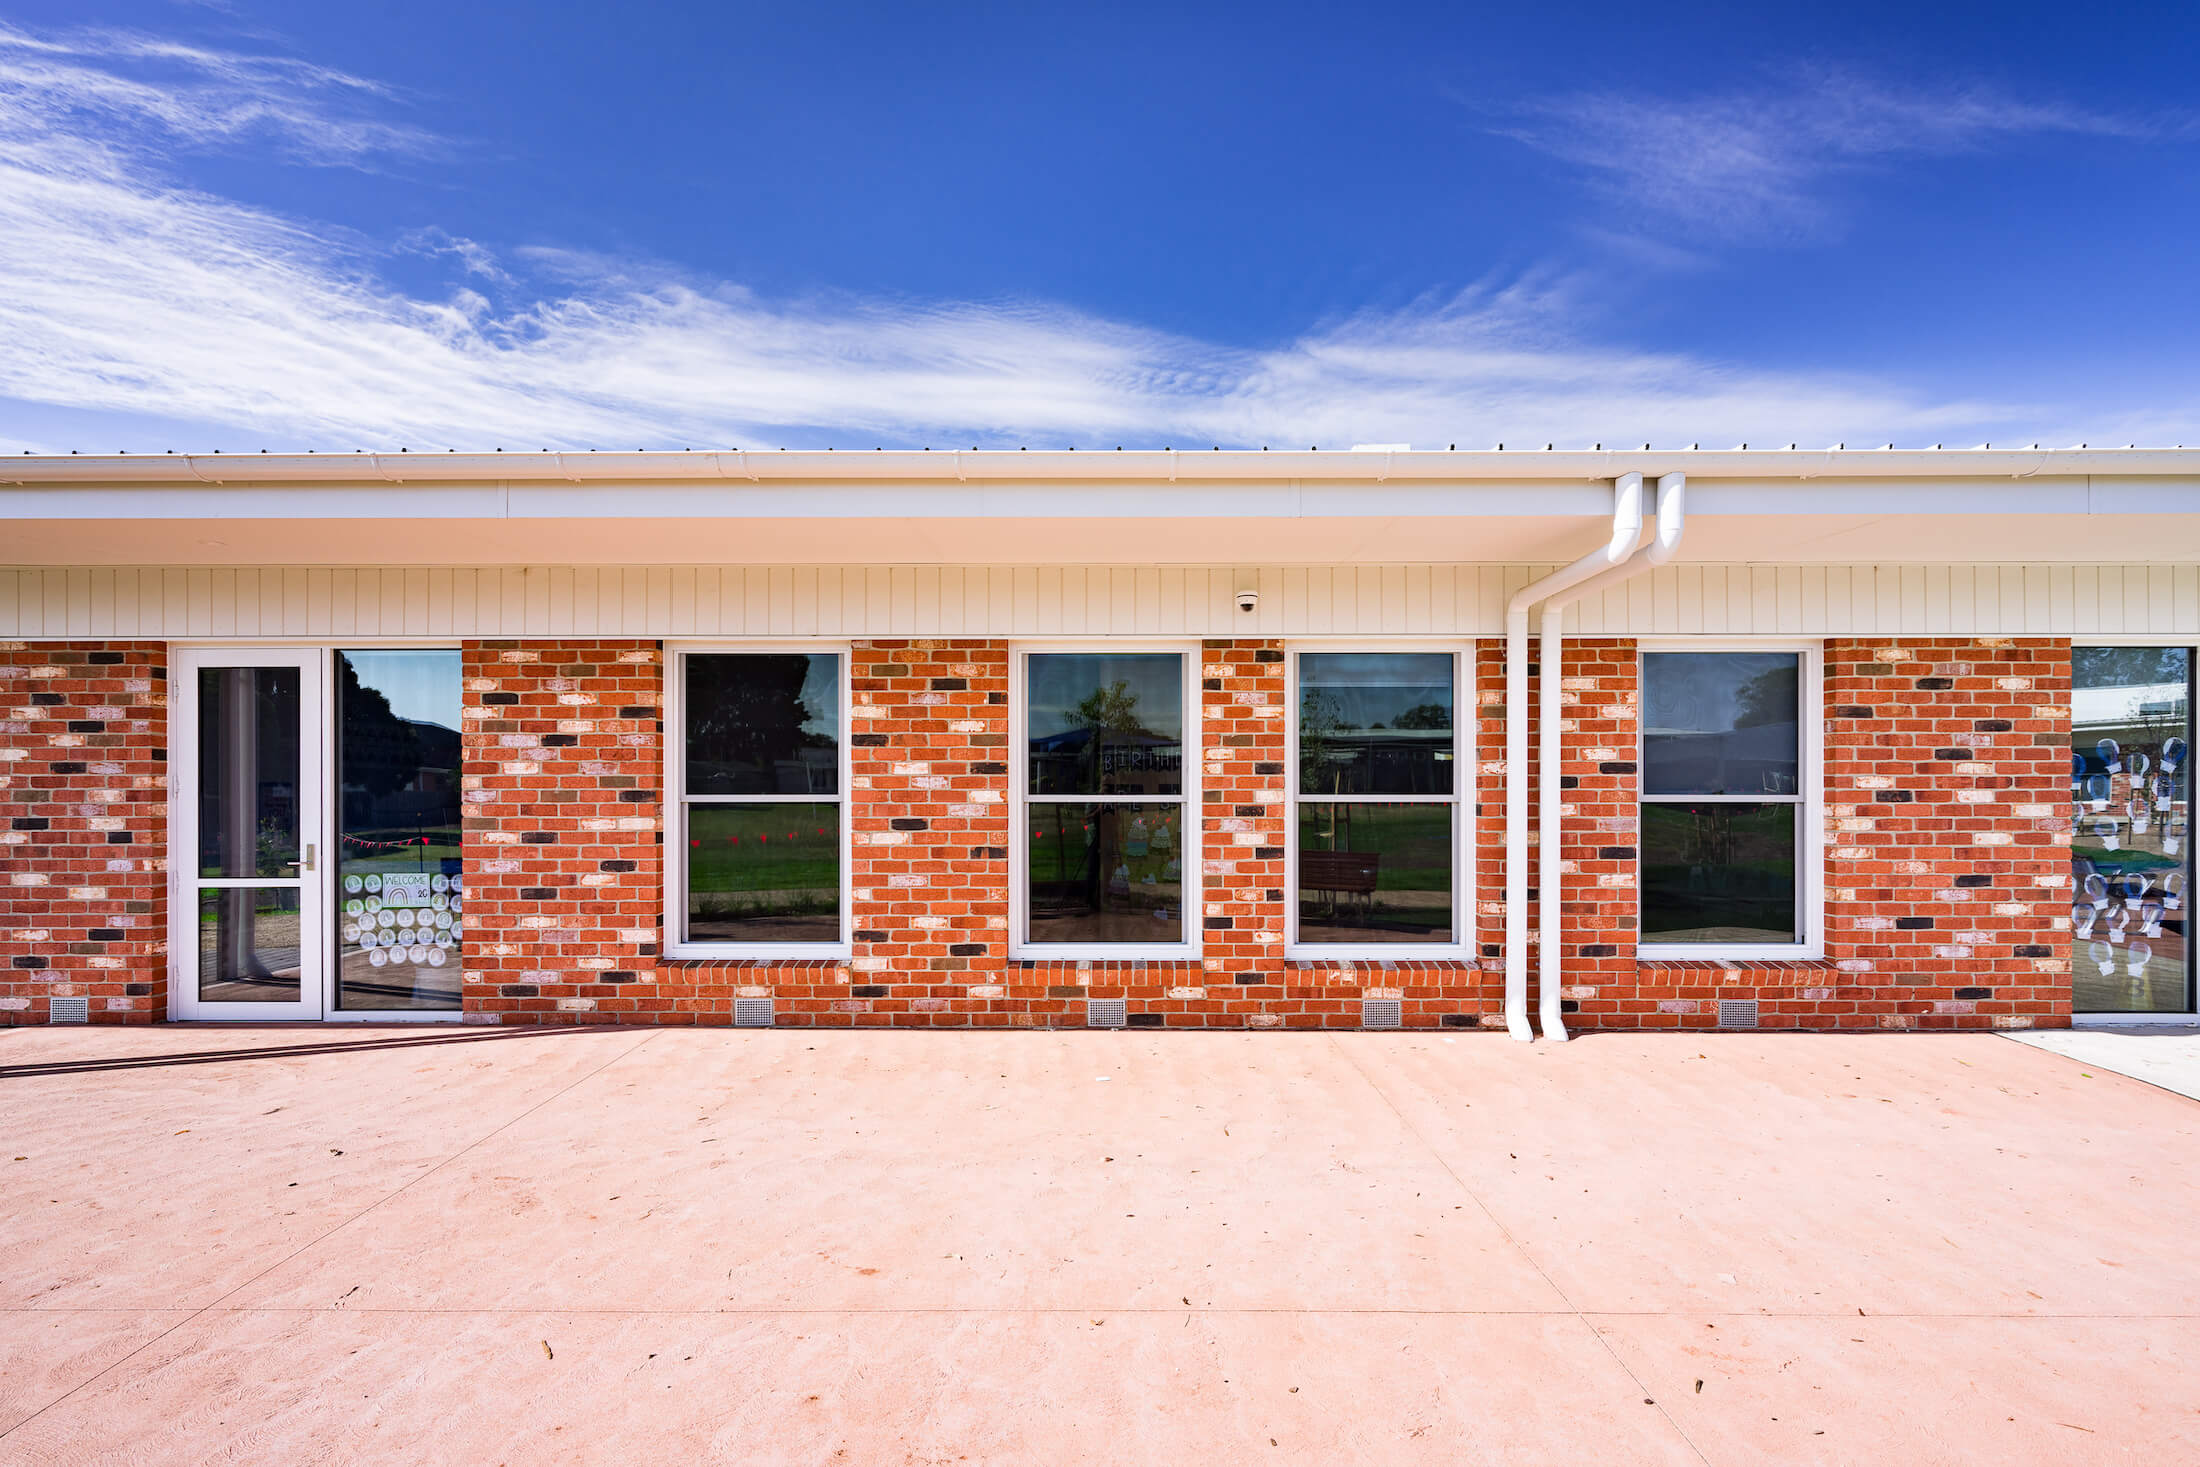 Modular brick school building, blue sky above